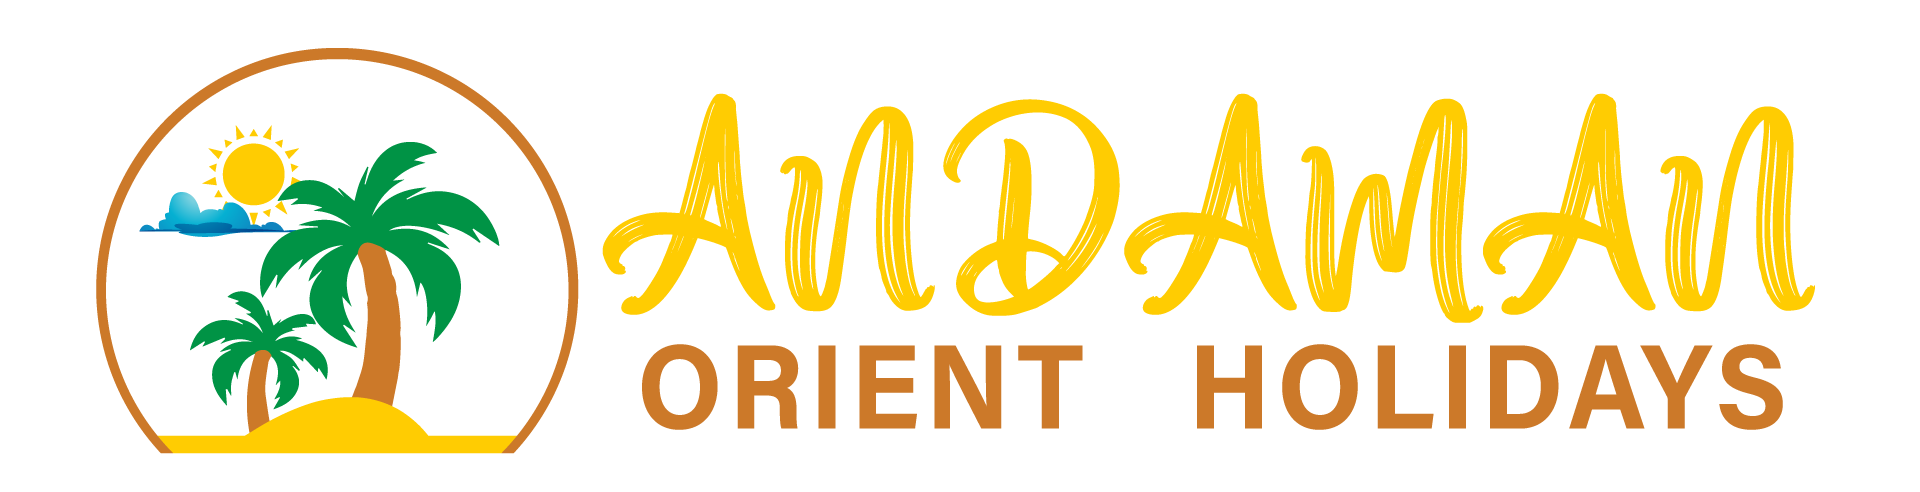 logo-parallel